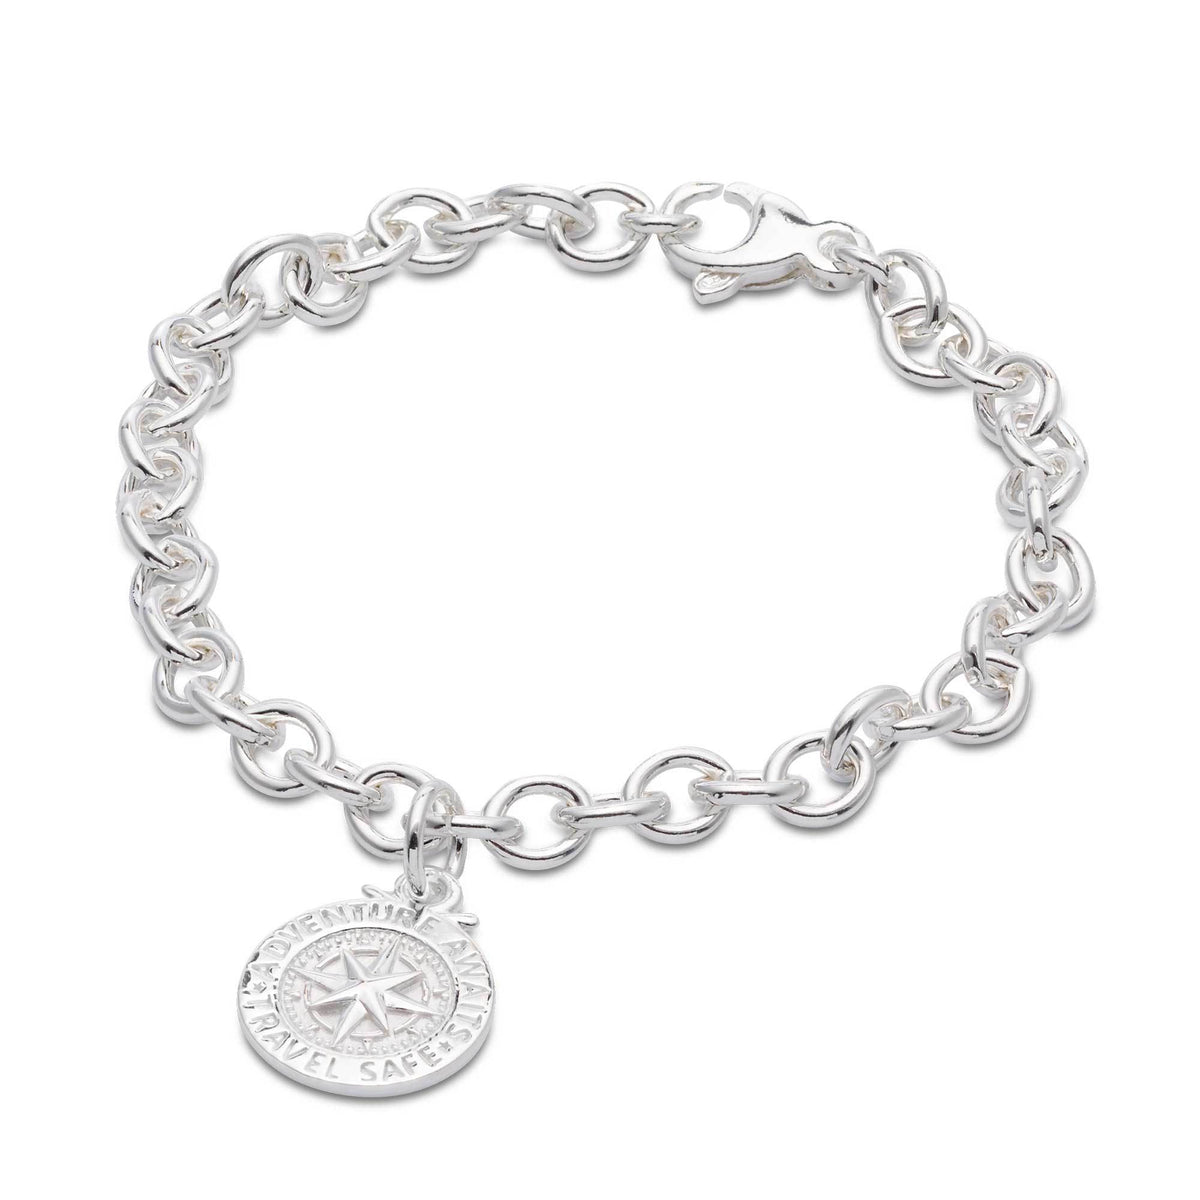 Silver compass saint christopher charm for bracelets bangles fit pandora travel gift idea